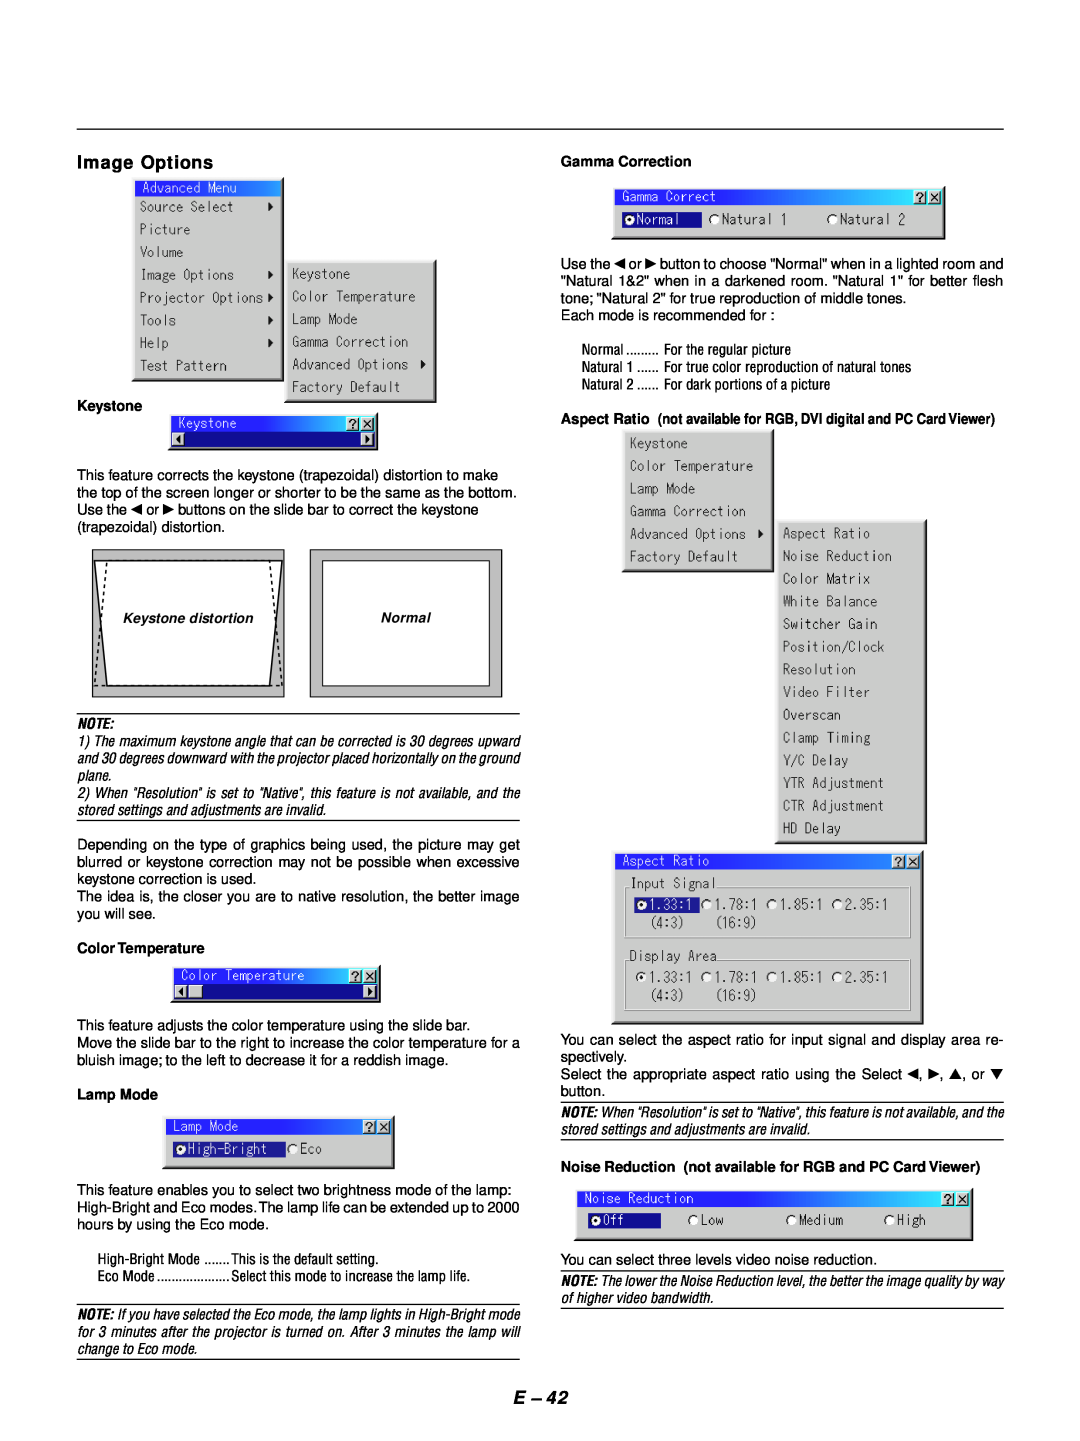 NEC GT1150 user manual Image Options, Keystone distortion, Normal, Color Temperature, Lamp Mode 